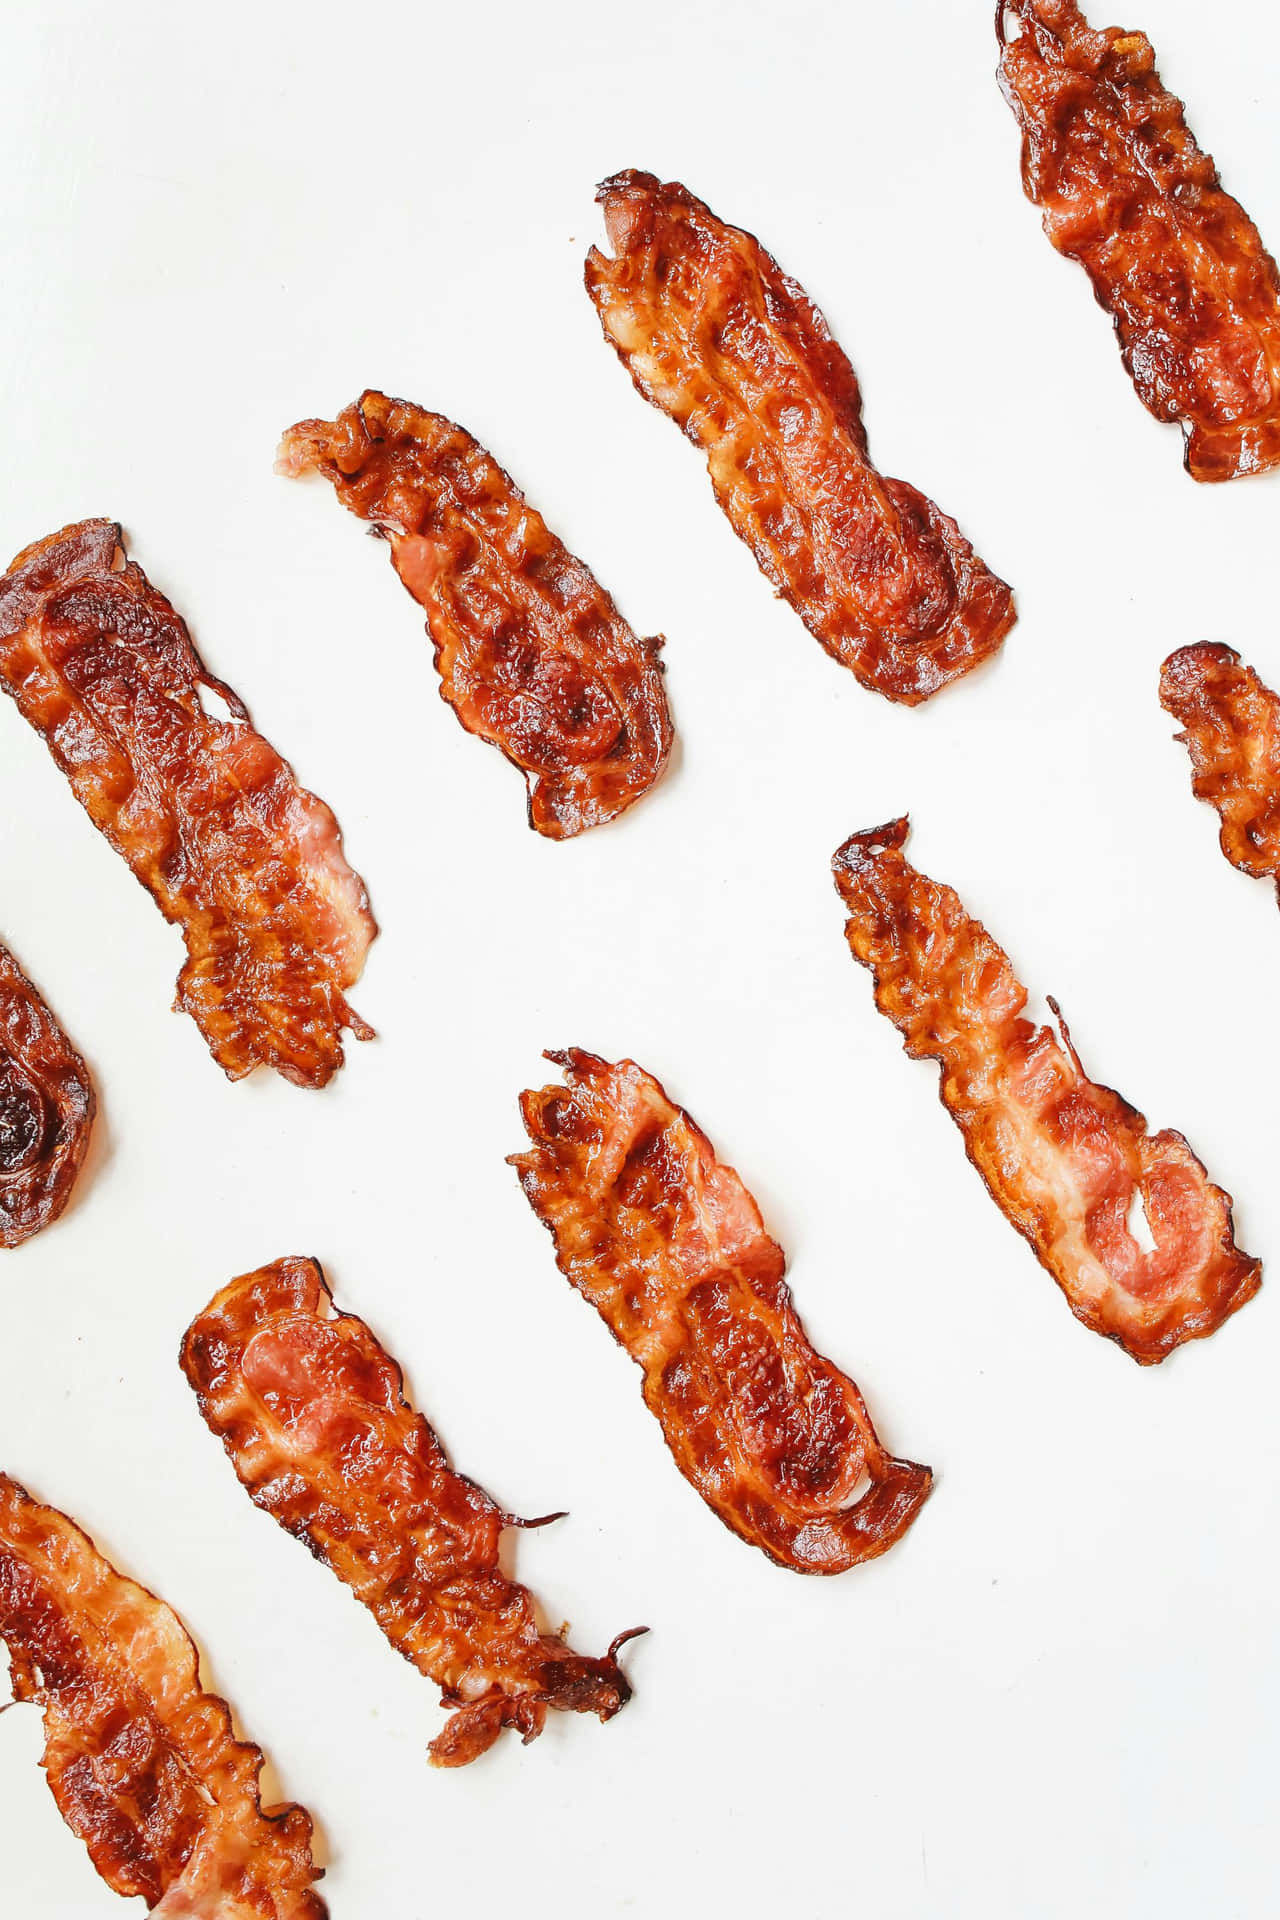 Crispy Bacon Strips Background